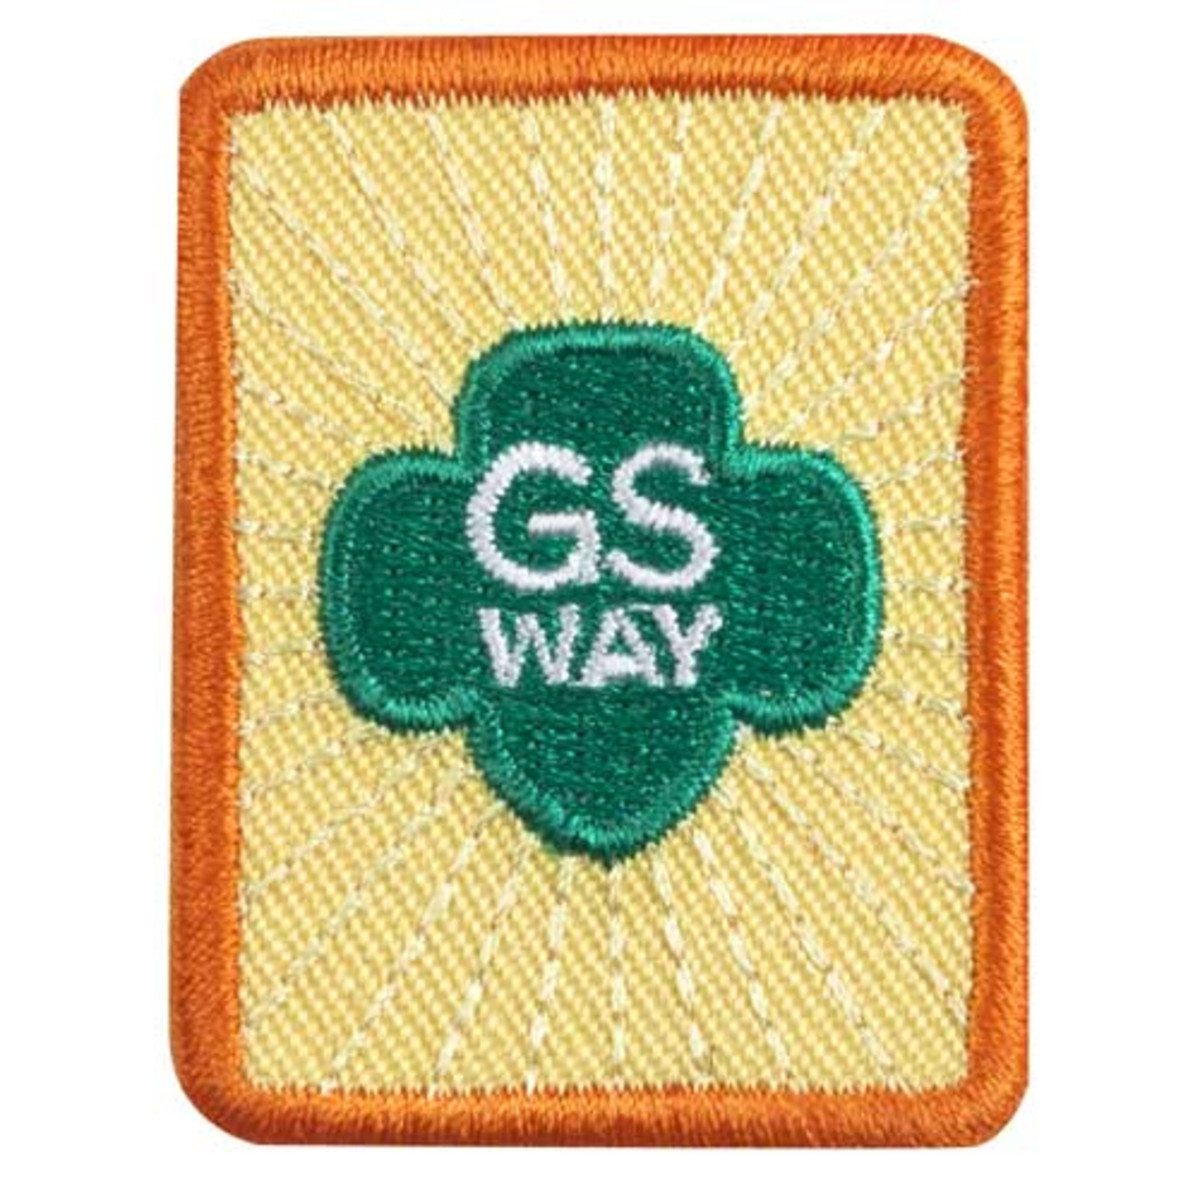 Sr. GS Way